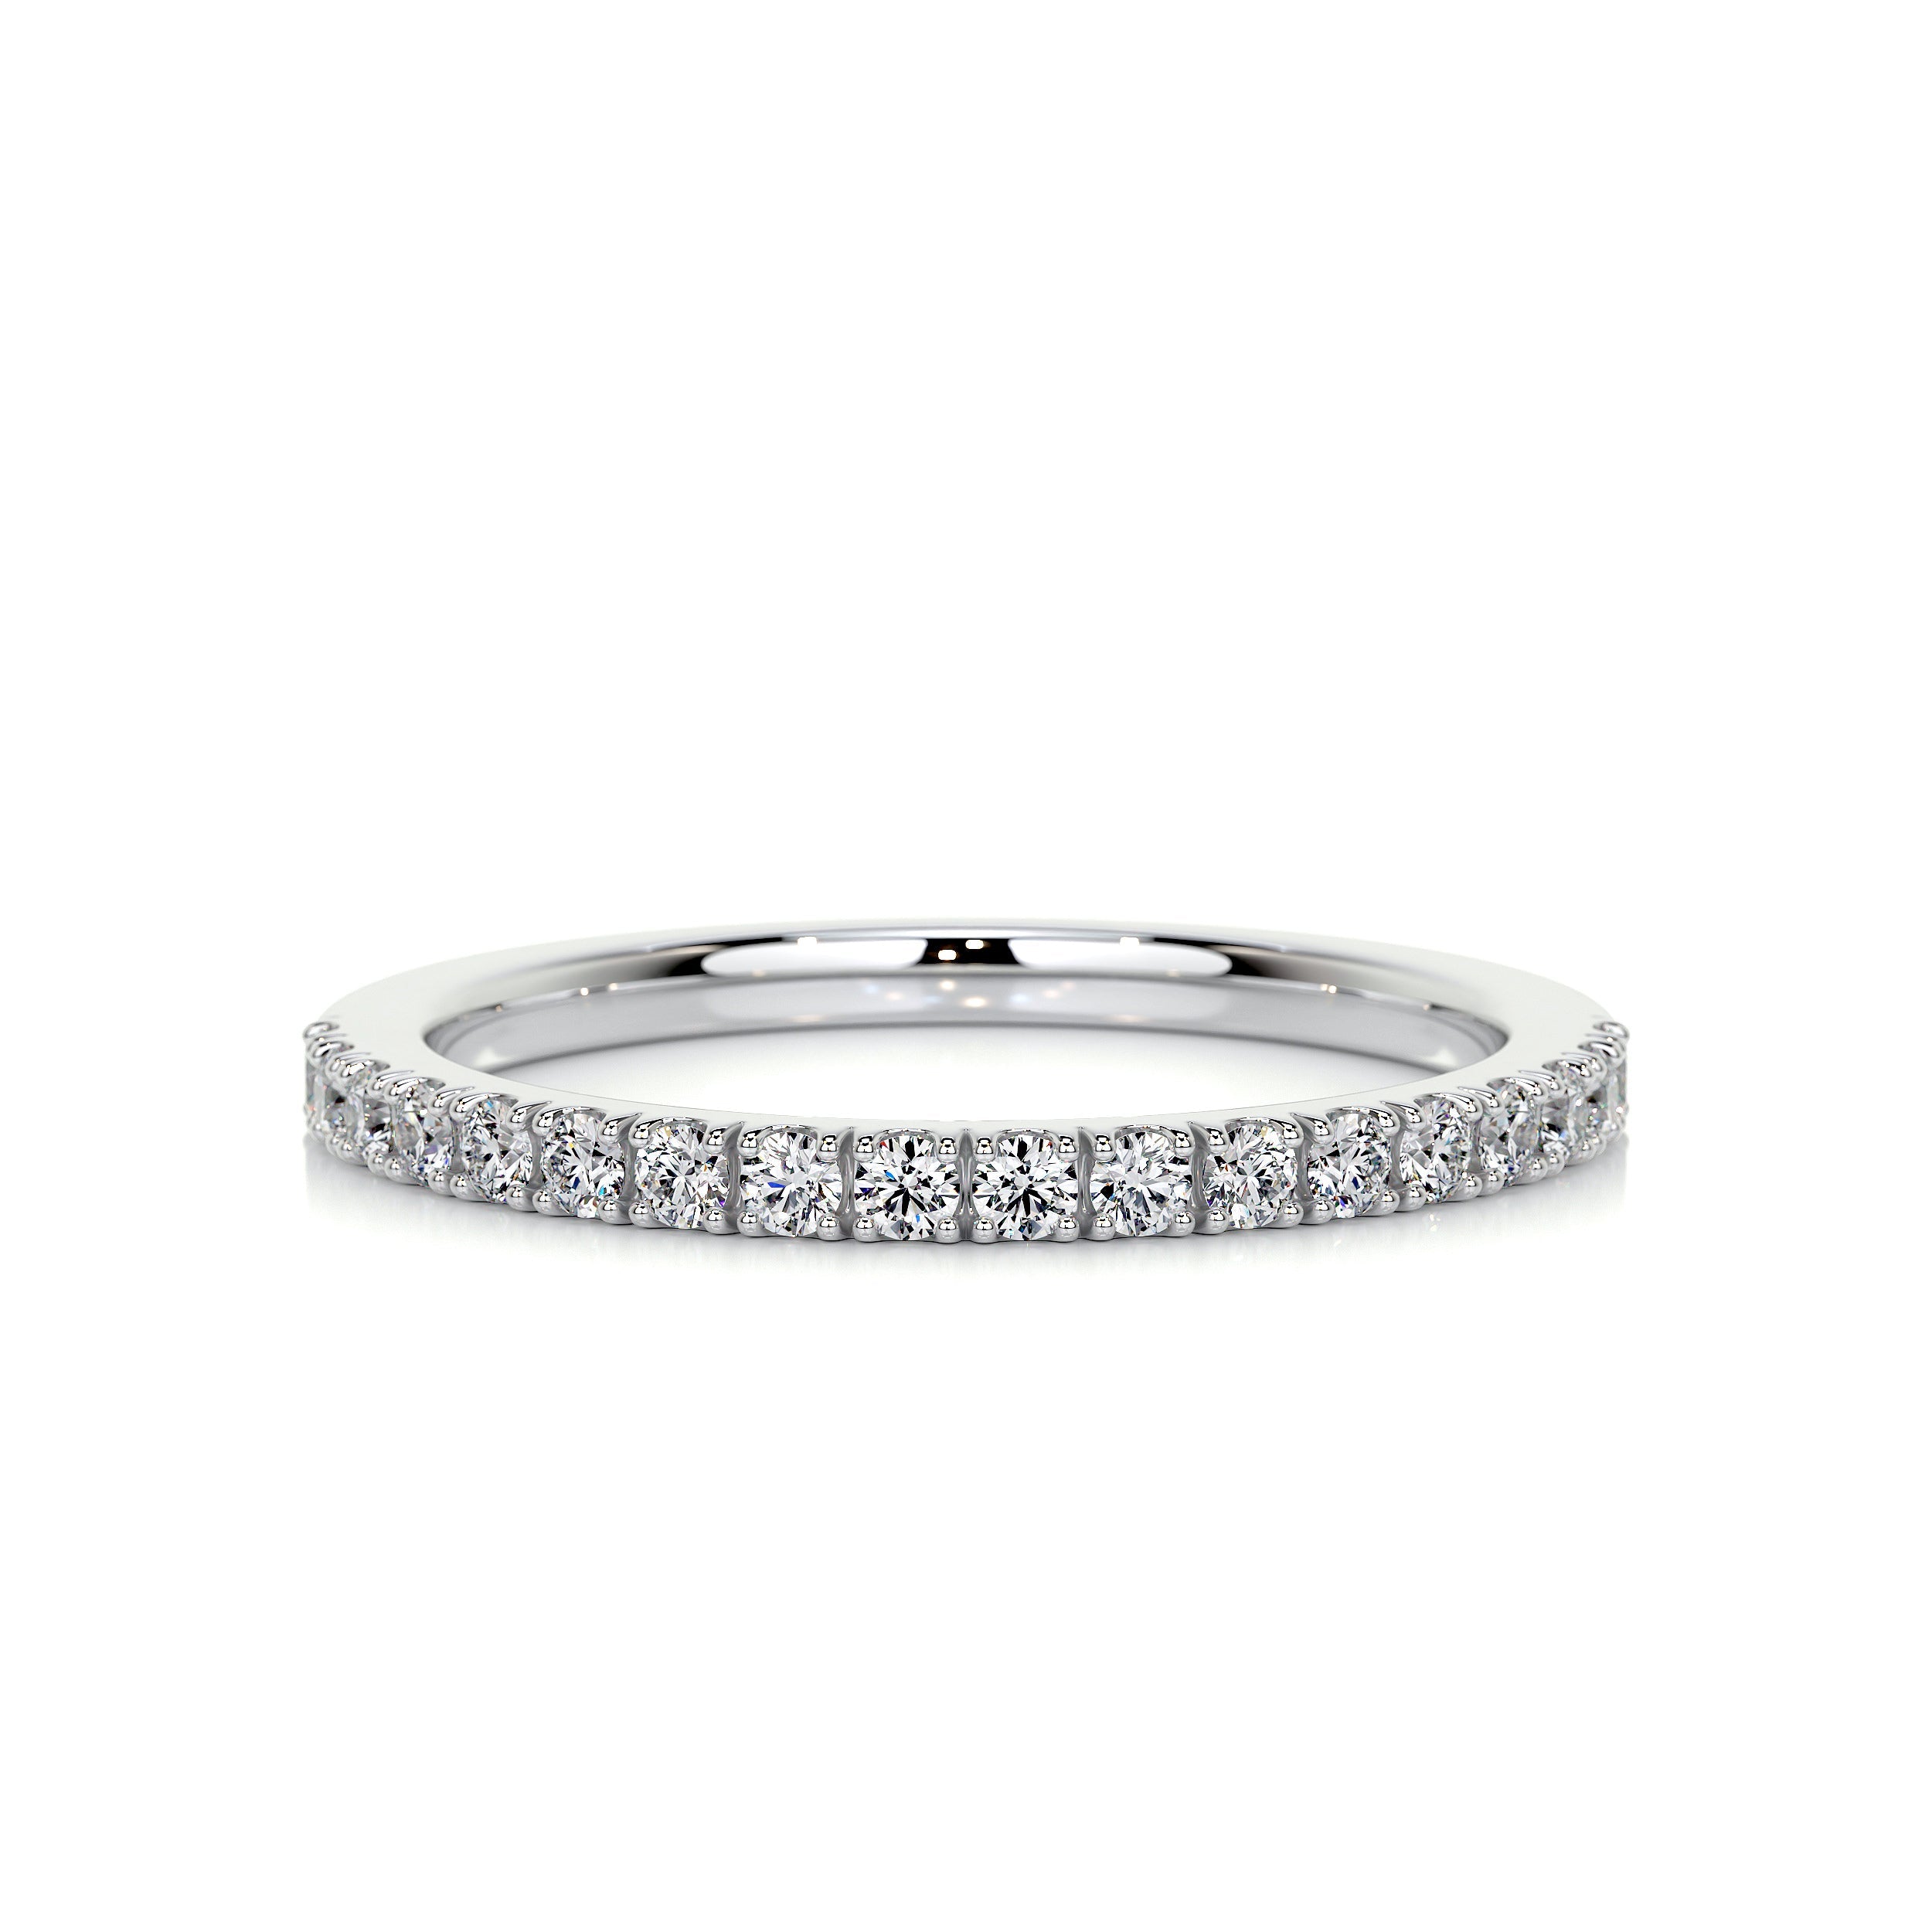 Stephanie Diamond Wedding Ring   (0.3 Carat) - 18K White Gold (RTS)